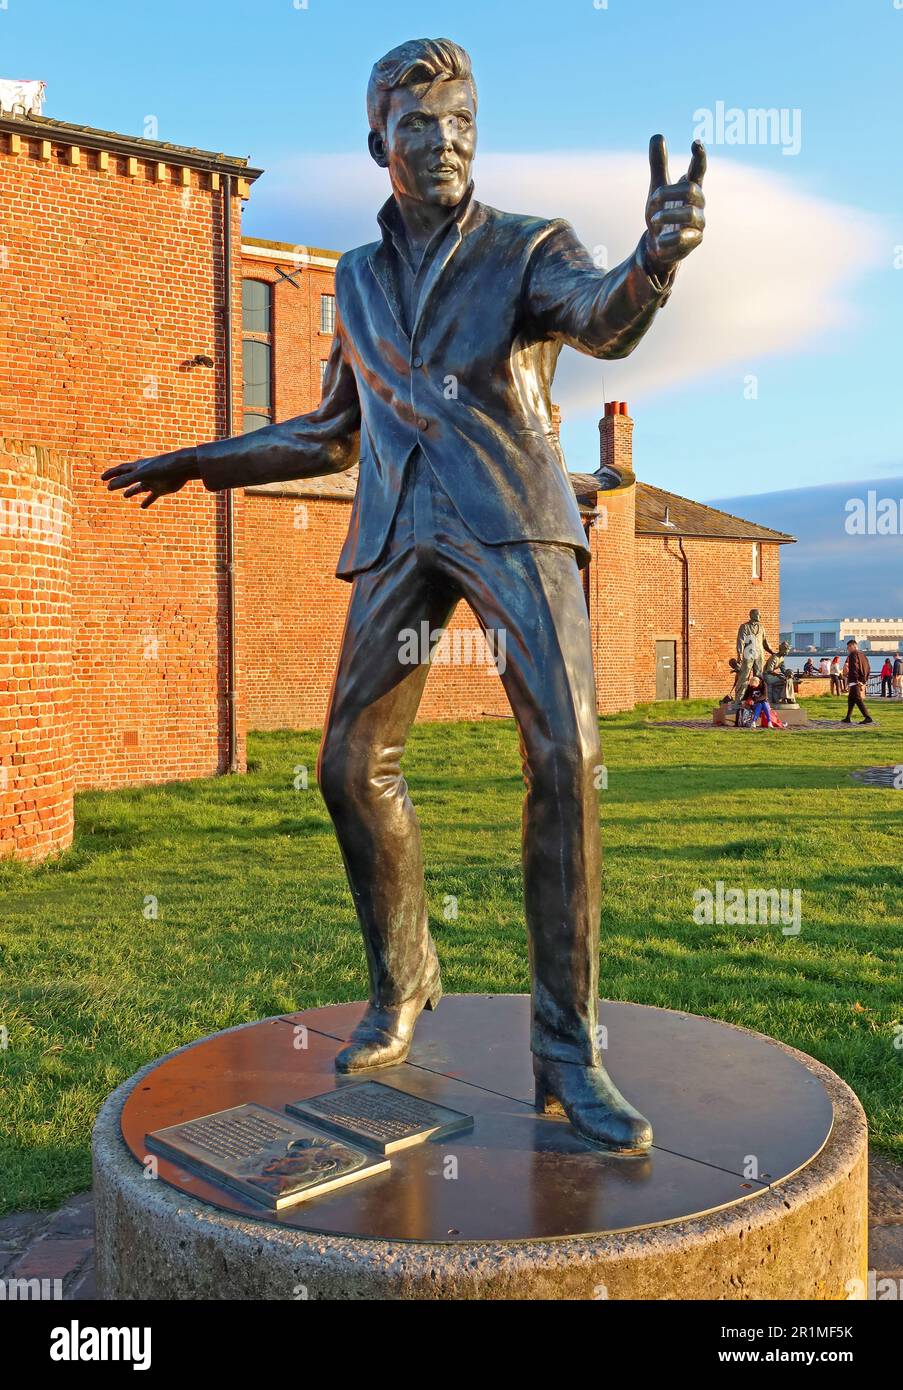 The Billy Fury memorial statue, Albert Dock, Pierhead, Kings Parade, Royal Albert Dock, Hartley Quay, Liverpool L3 4AQ Stock Photo